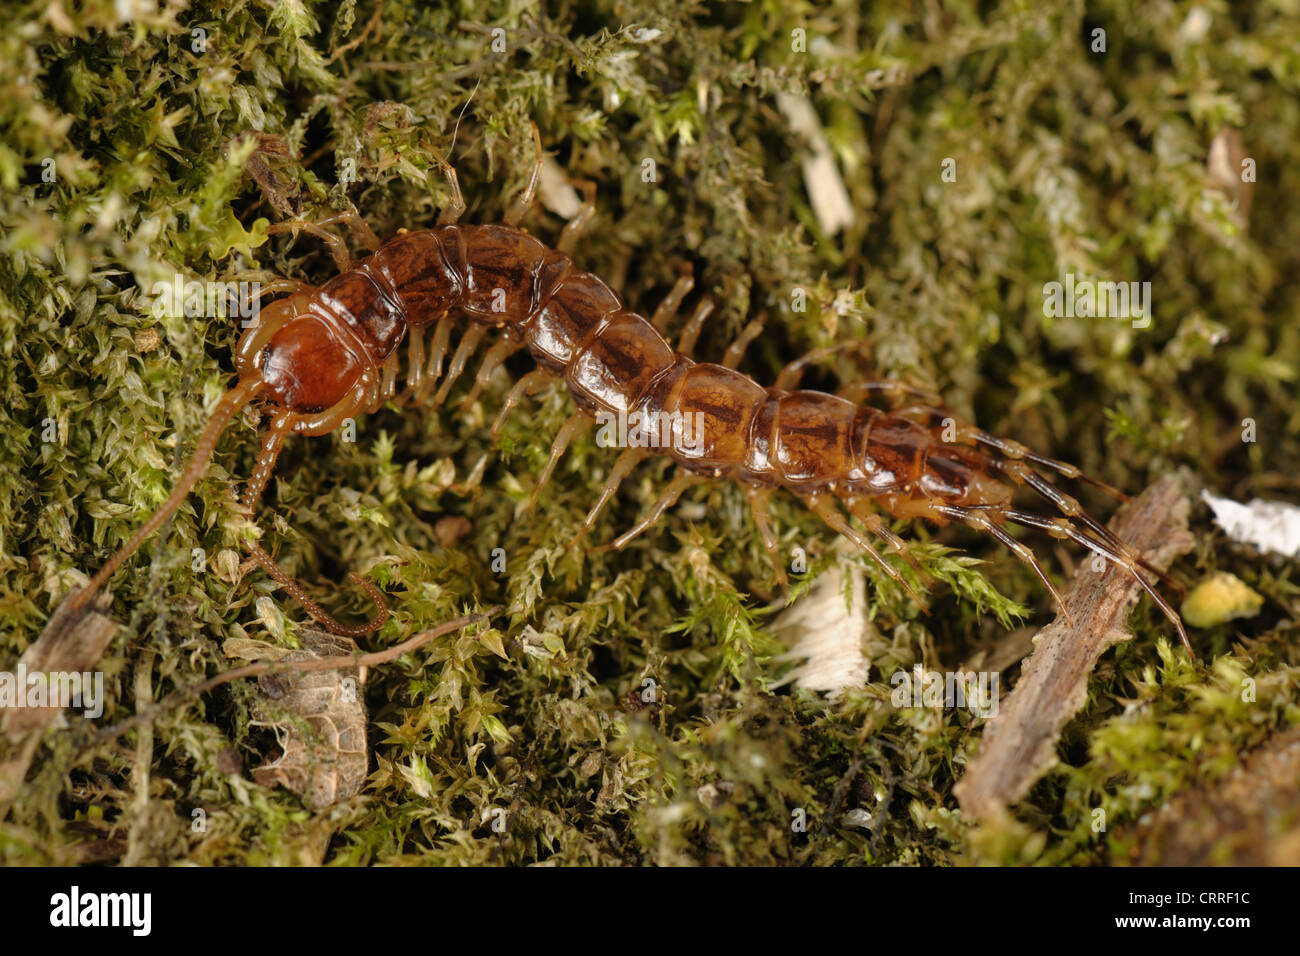 A centipede Lithobius forficatus adult Stock Photo